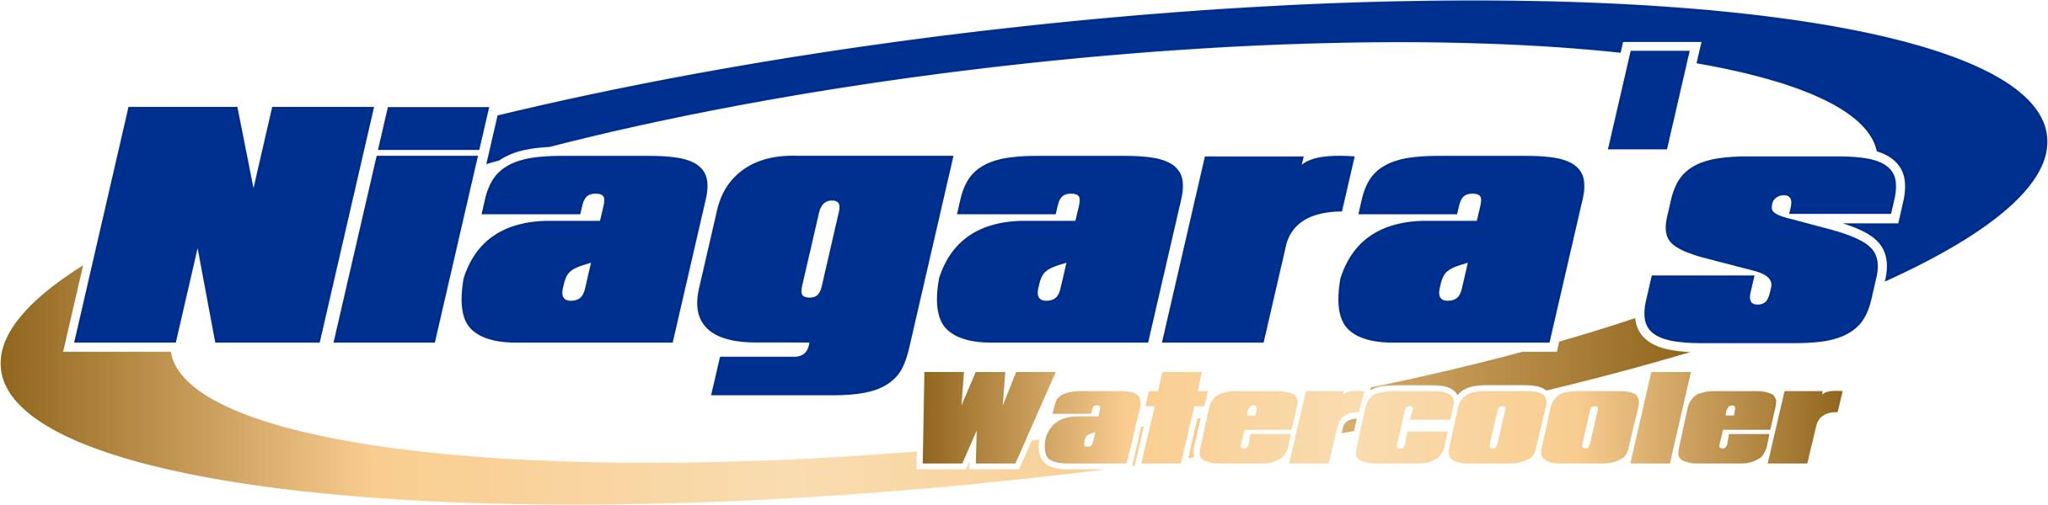 Niagara's Watercooler Podcast